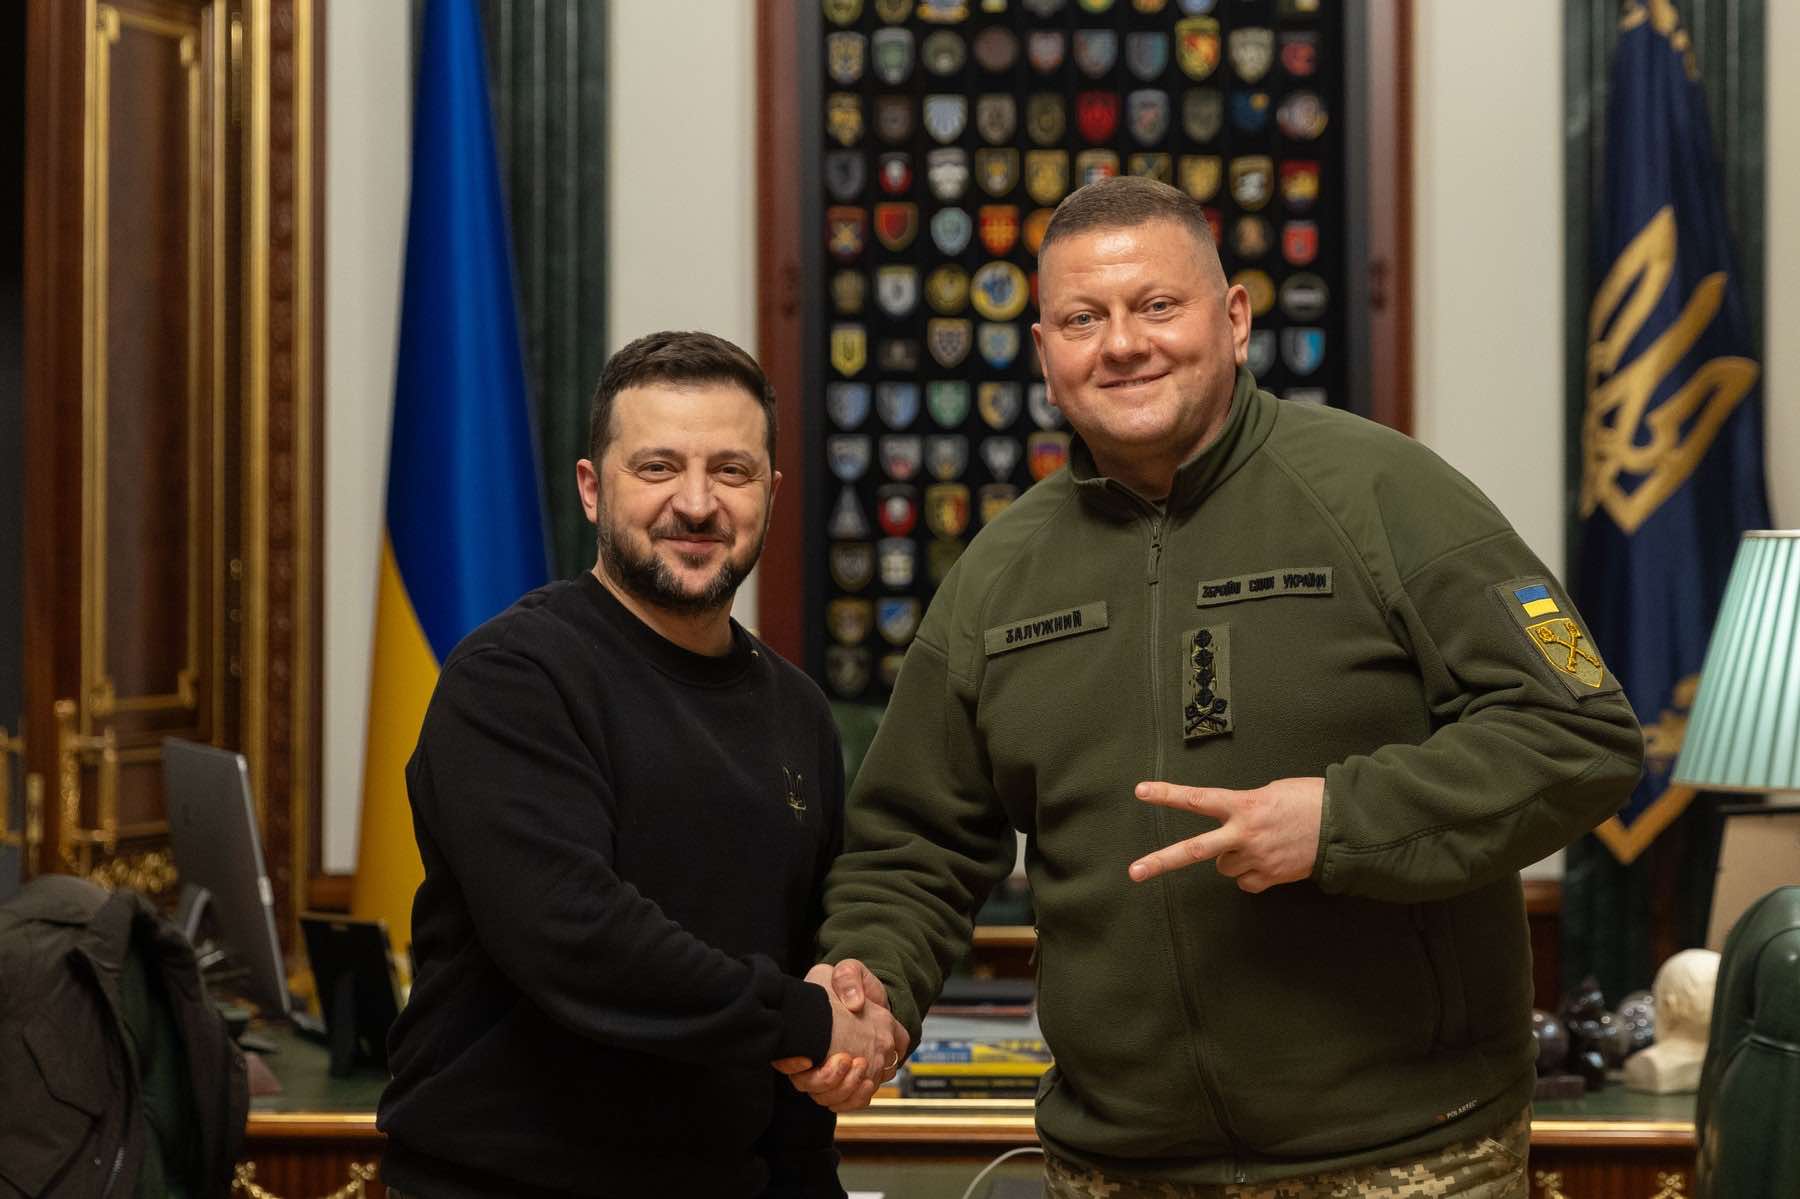 Ukraine President Volodymyr Zelenskyy posted this picture with commander-in-chief Valerii Zaluzhnyi